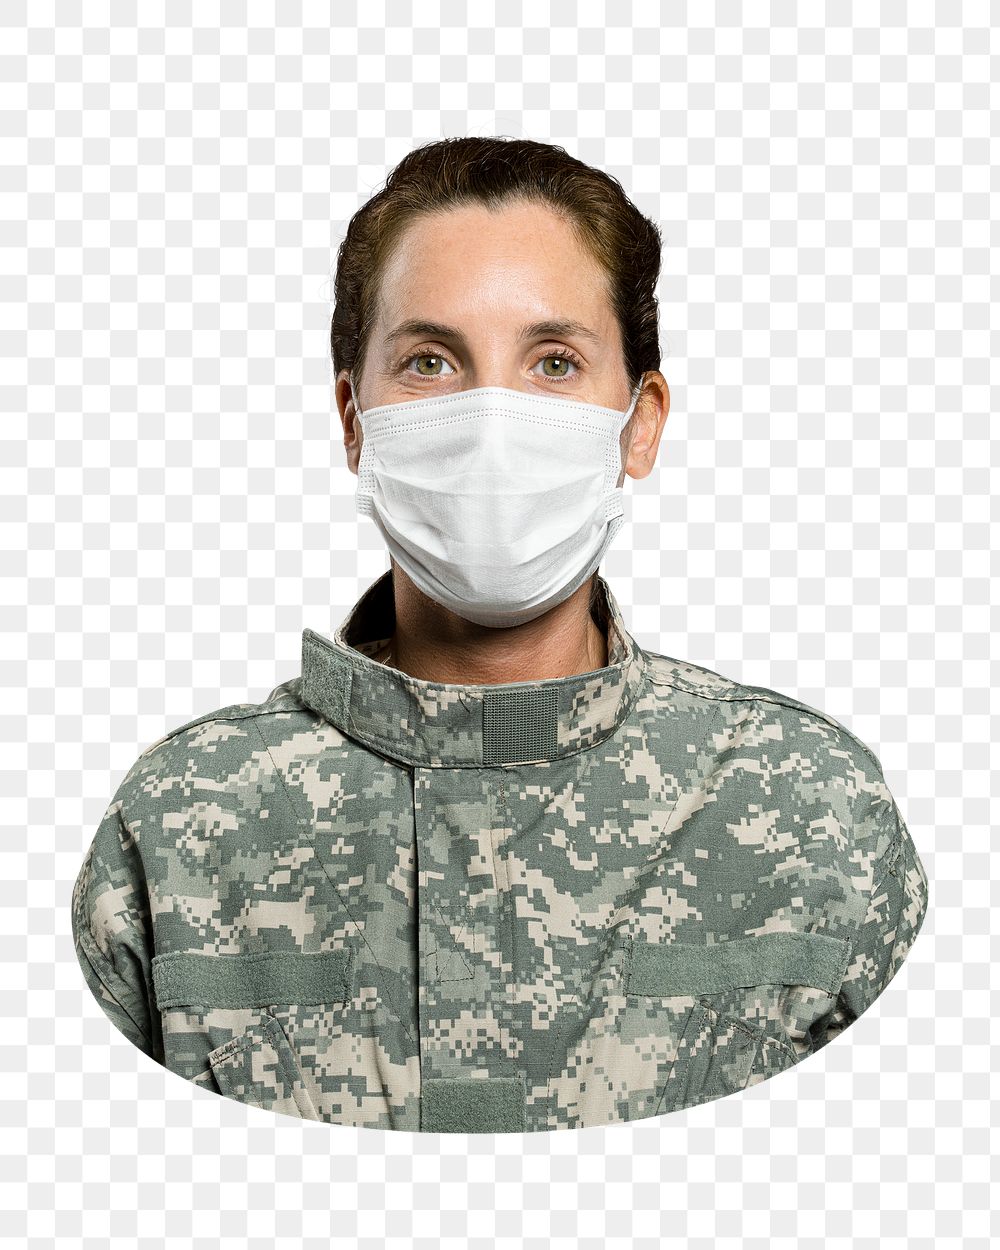 Female soldier png face mask, transparent background